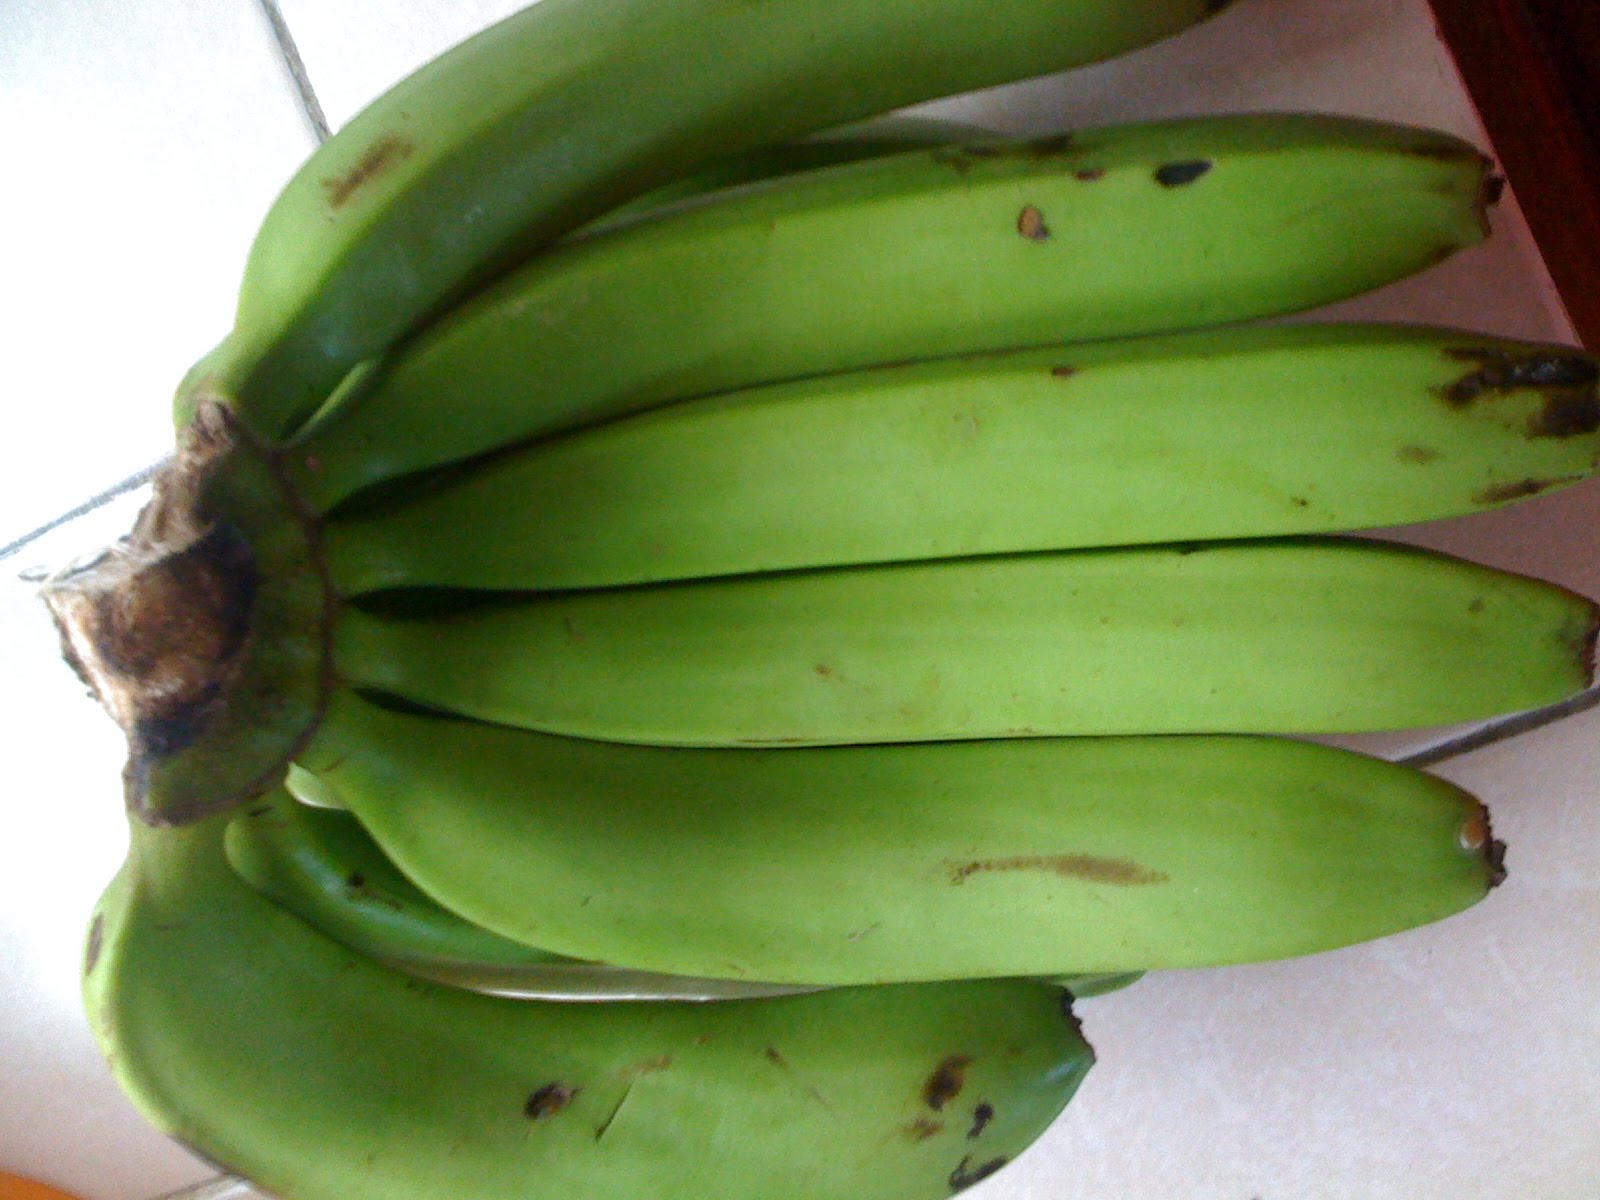 How to peel green bananas. Peeling green bananas - YouTube